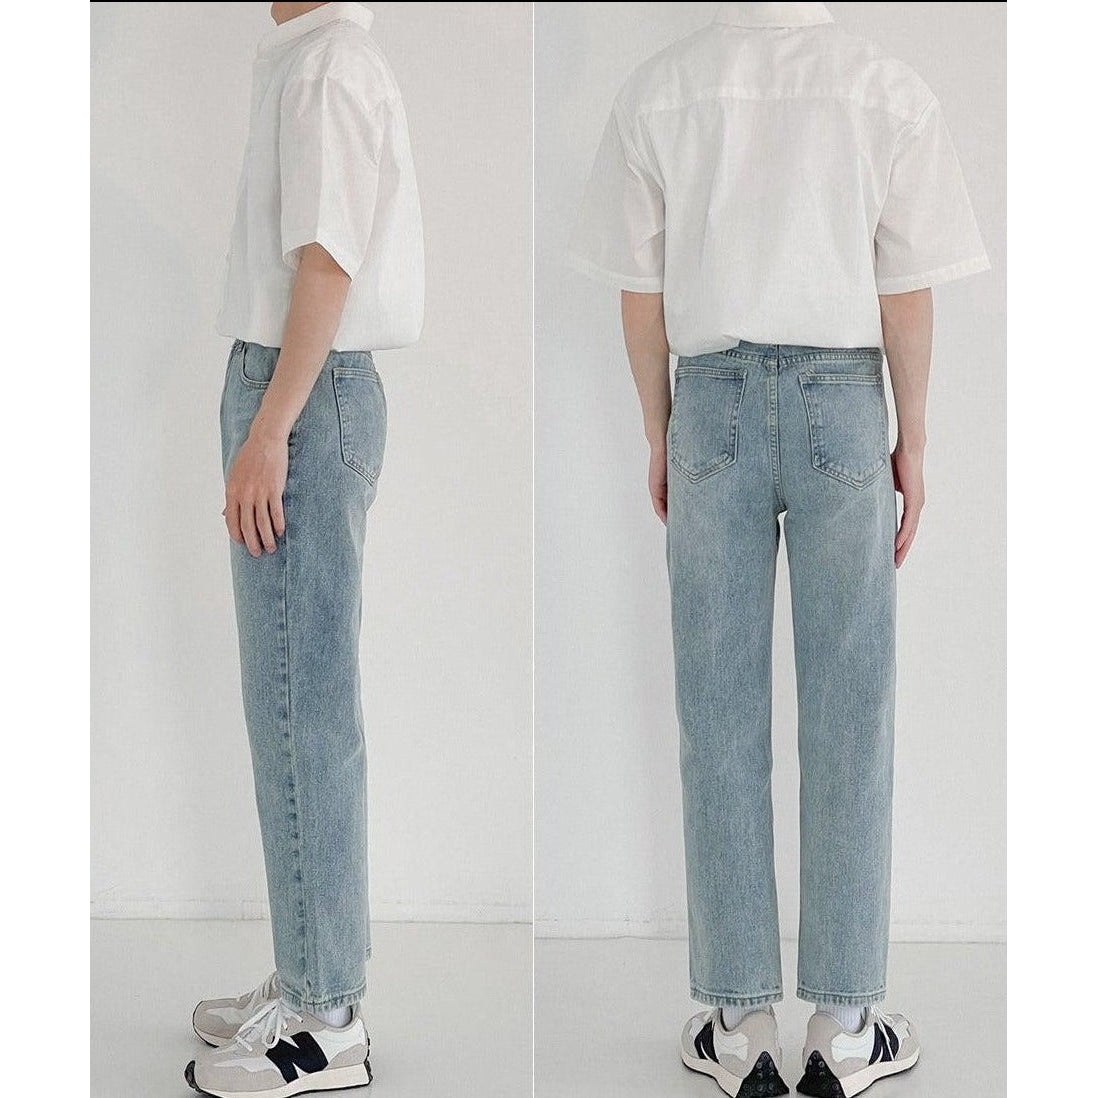 Zhou Casual Straight Ankle Length Jeans-korean-fashion-Jeans-Zhou's Closet-OH Garments